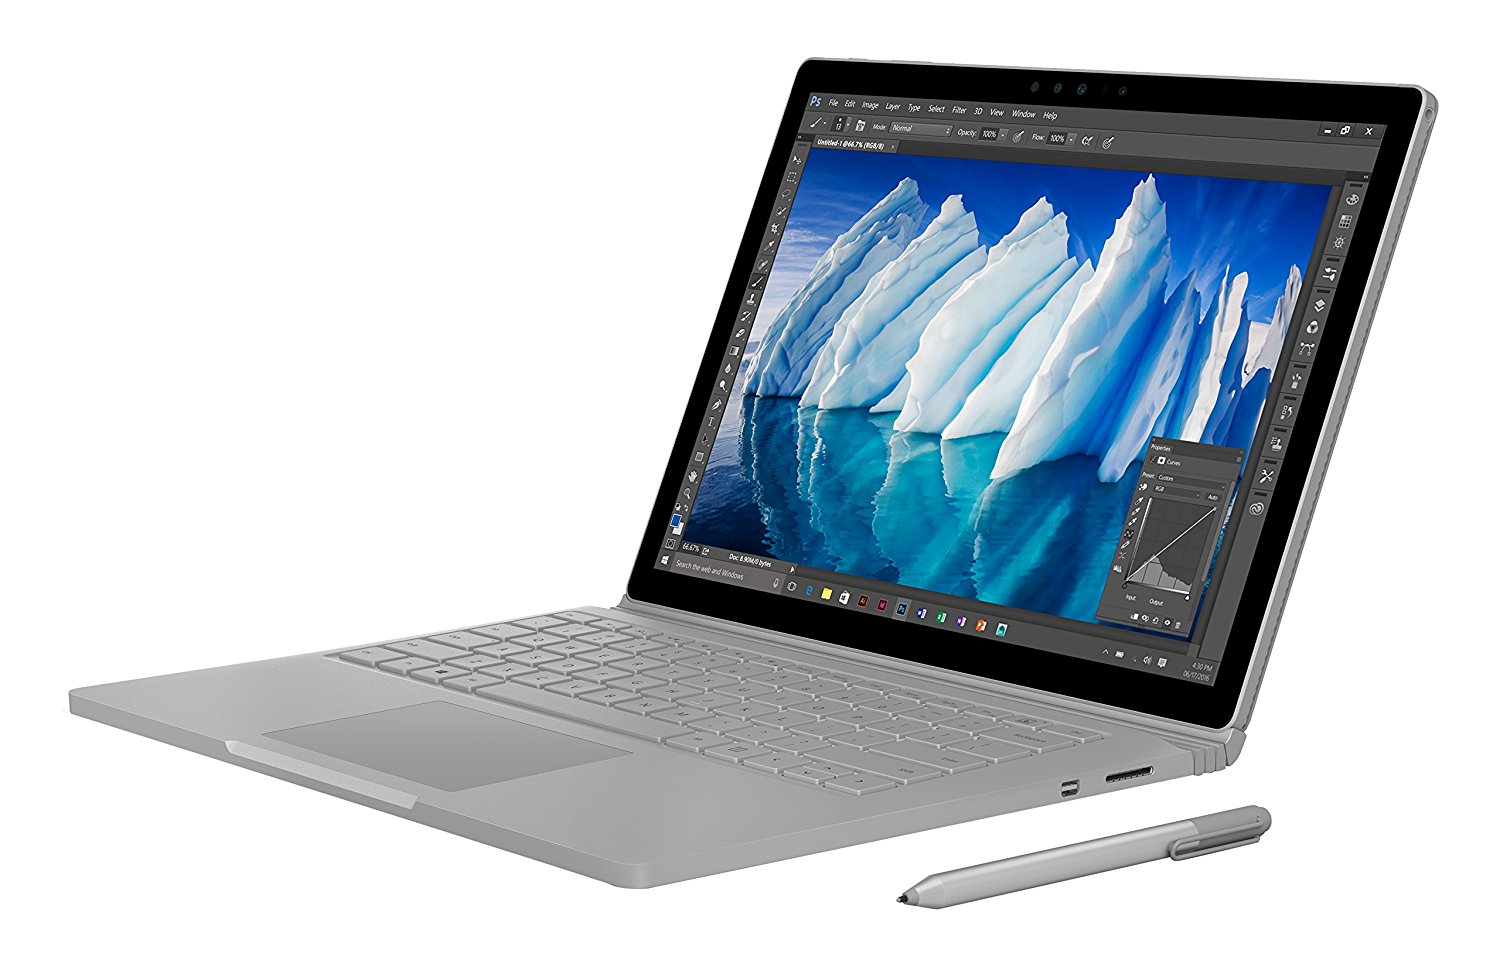 Microsoft Surface Book 13.5 i7-6660U 2.4GHz, 8GB RAM, 256GB SSD, W10, Pen